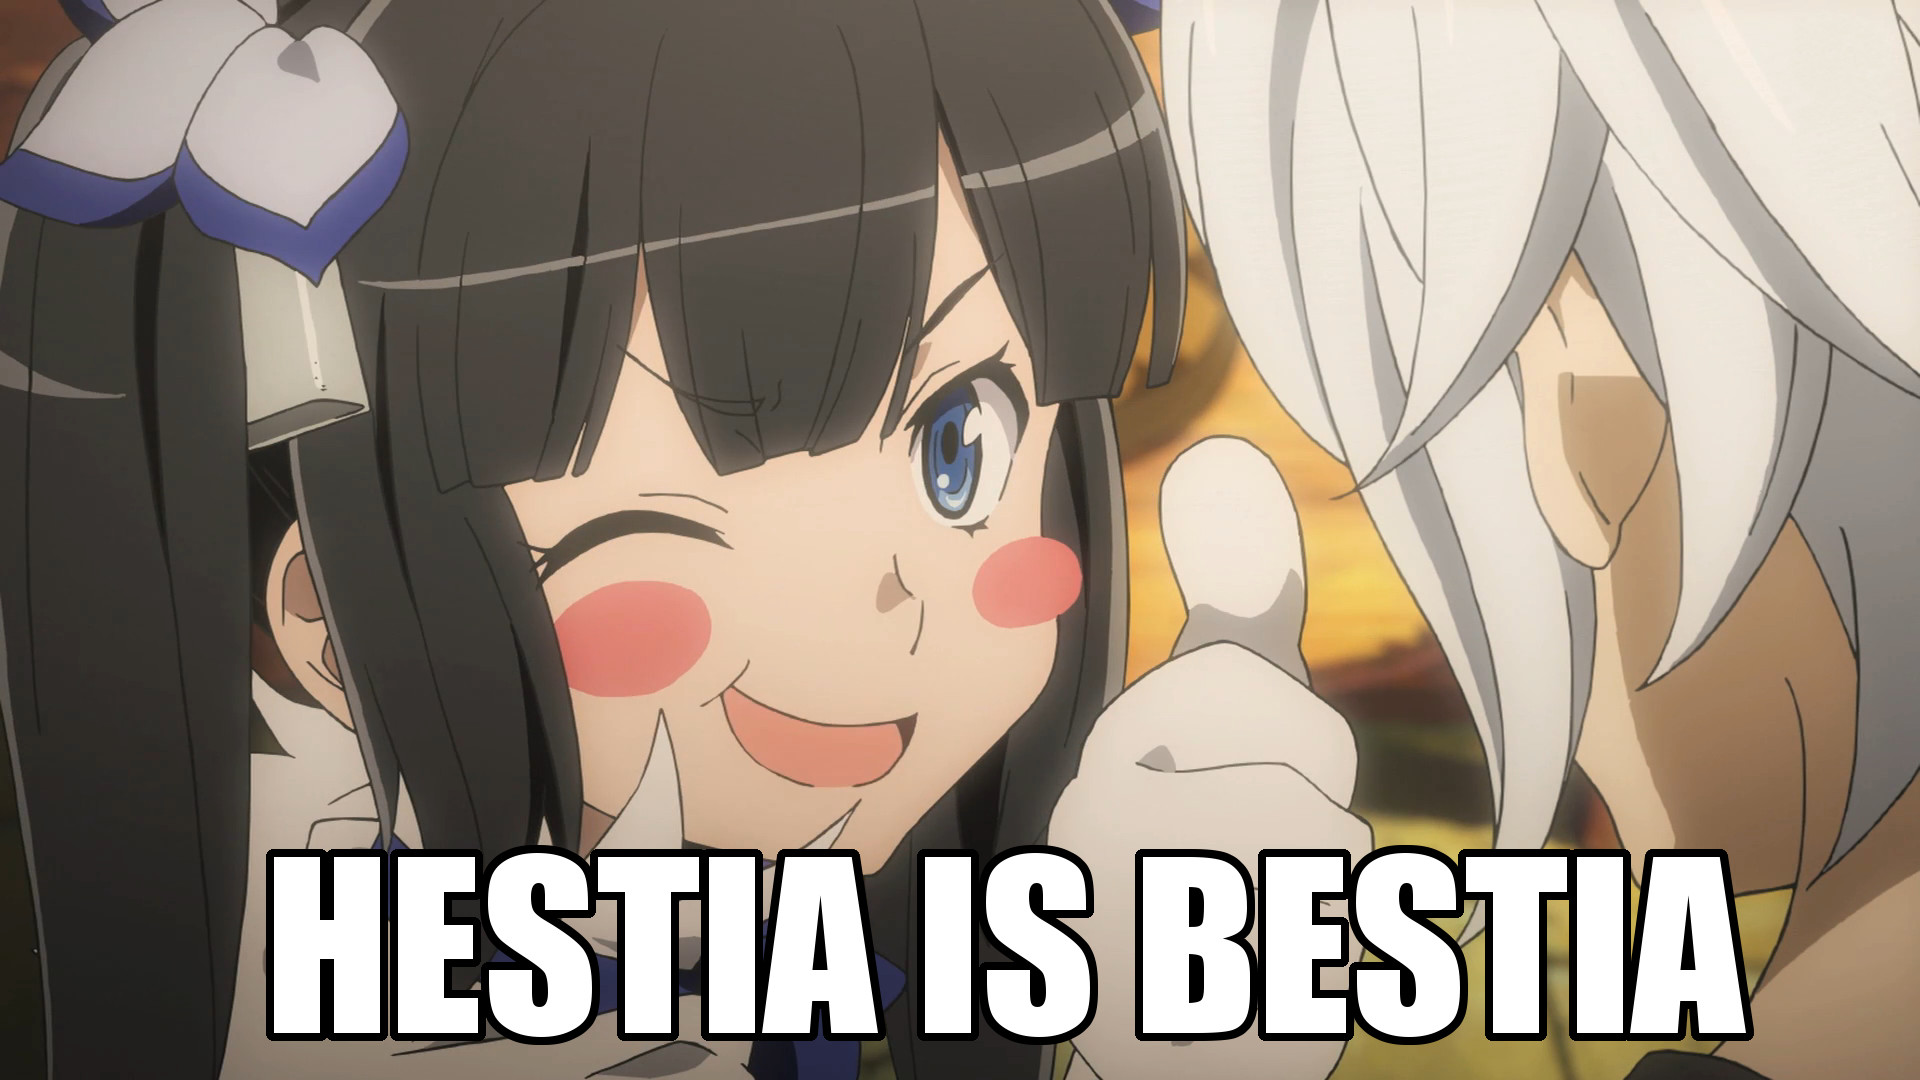 Ask Sentai #4: Robot Families and Hestia's Blue Ribbon